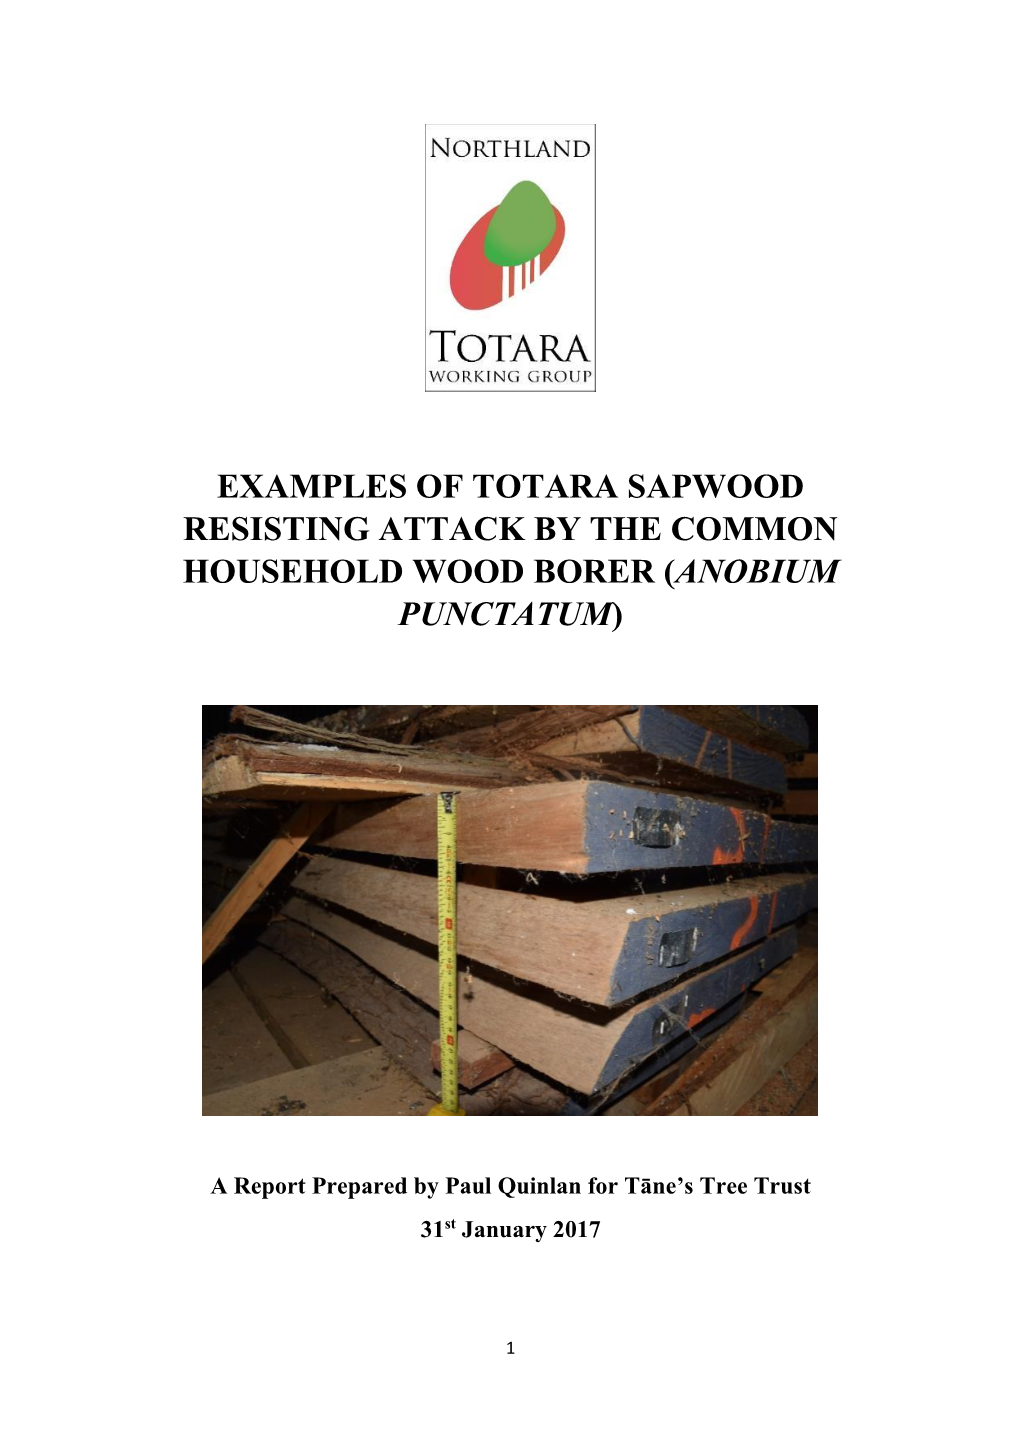 Examples of Totara Sapwood Resisting Attack by the Common Household Wood Borer (Anobium Punctatum)